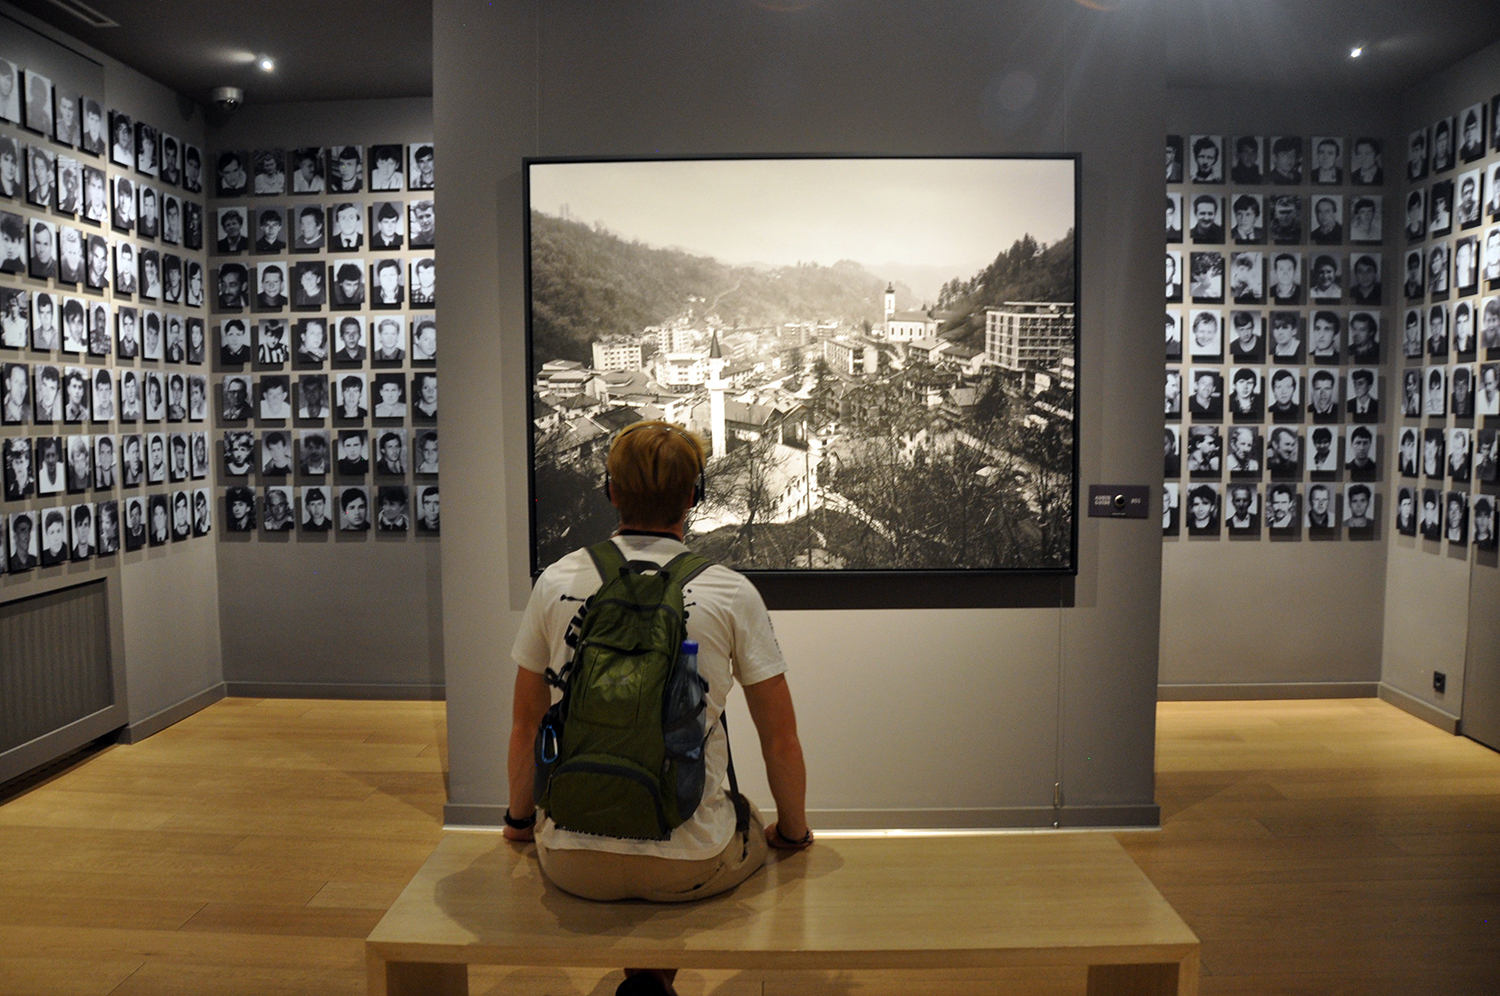 Srebrenica Genocide Museum Gallery 11/07/95 Sarajevo Bosnia Travel